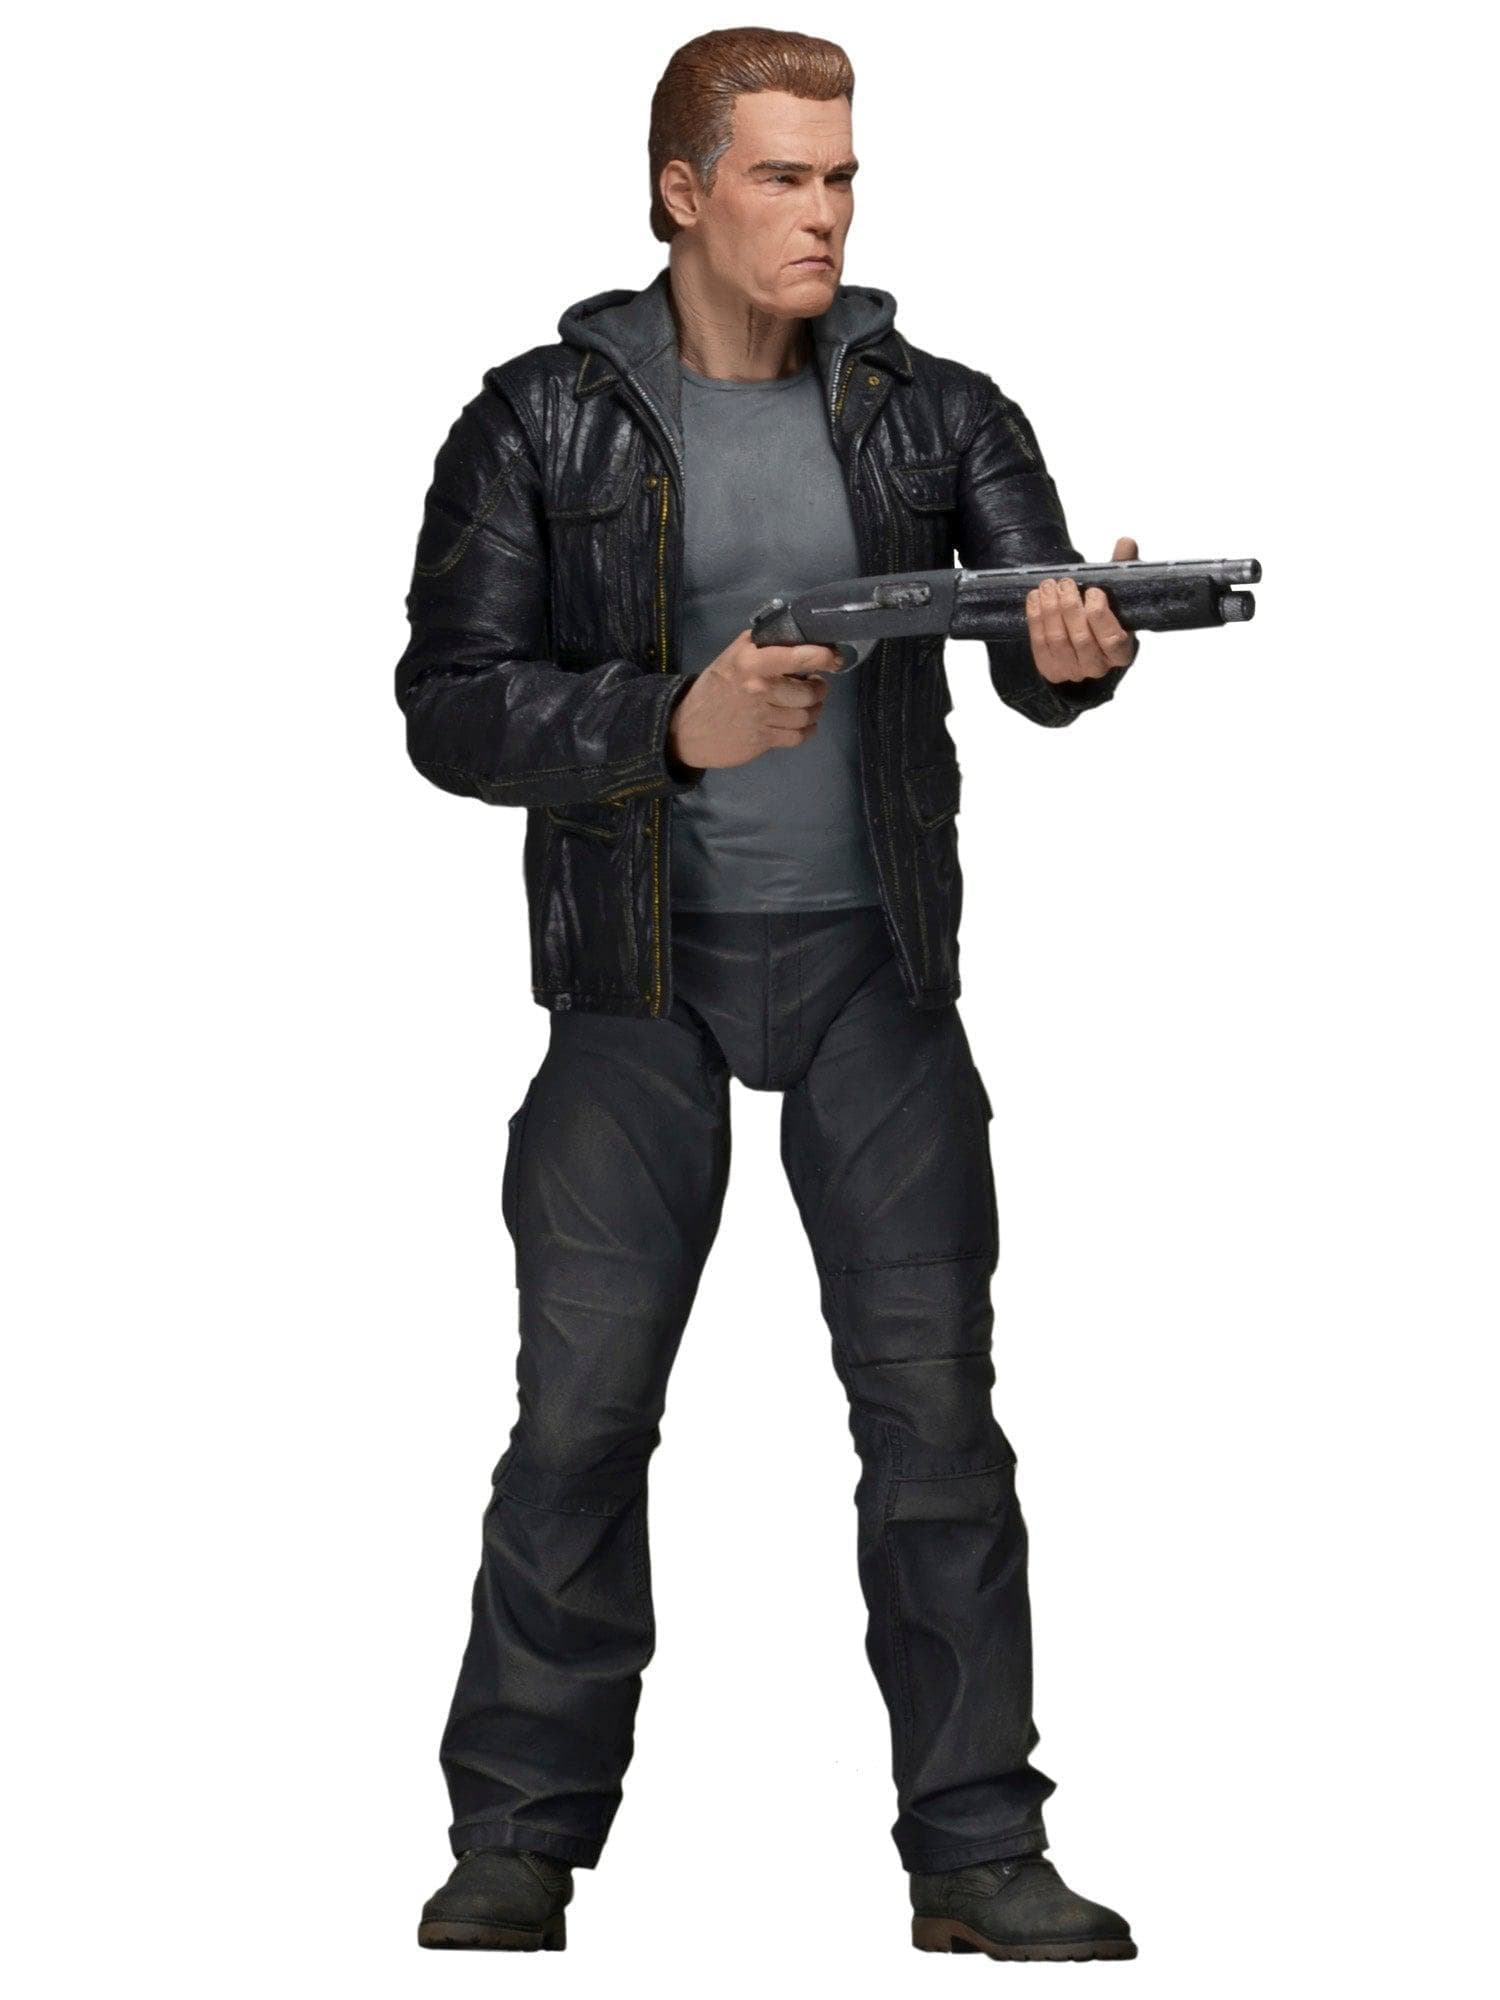 NECA - Terminator Genisys - 7" Scale Action Figure - Series 1 Guard - costumes.com